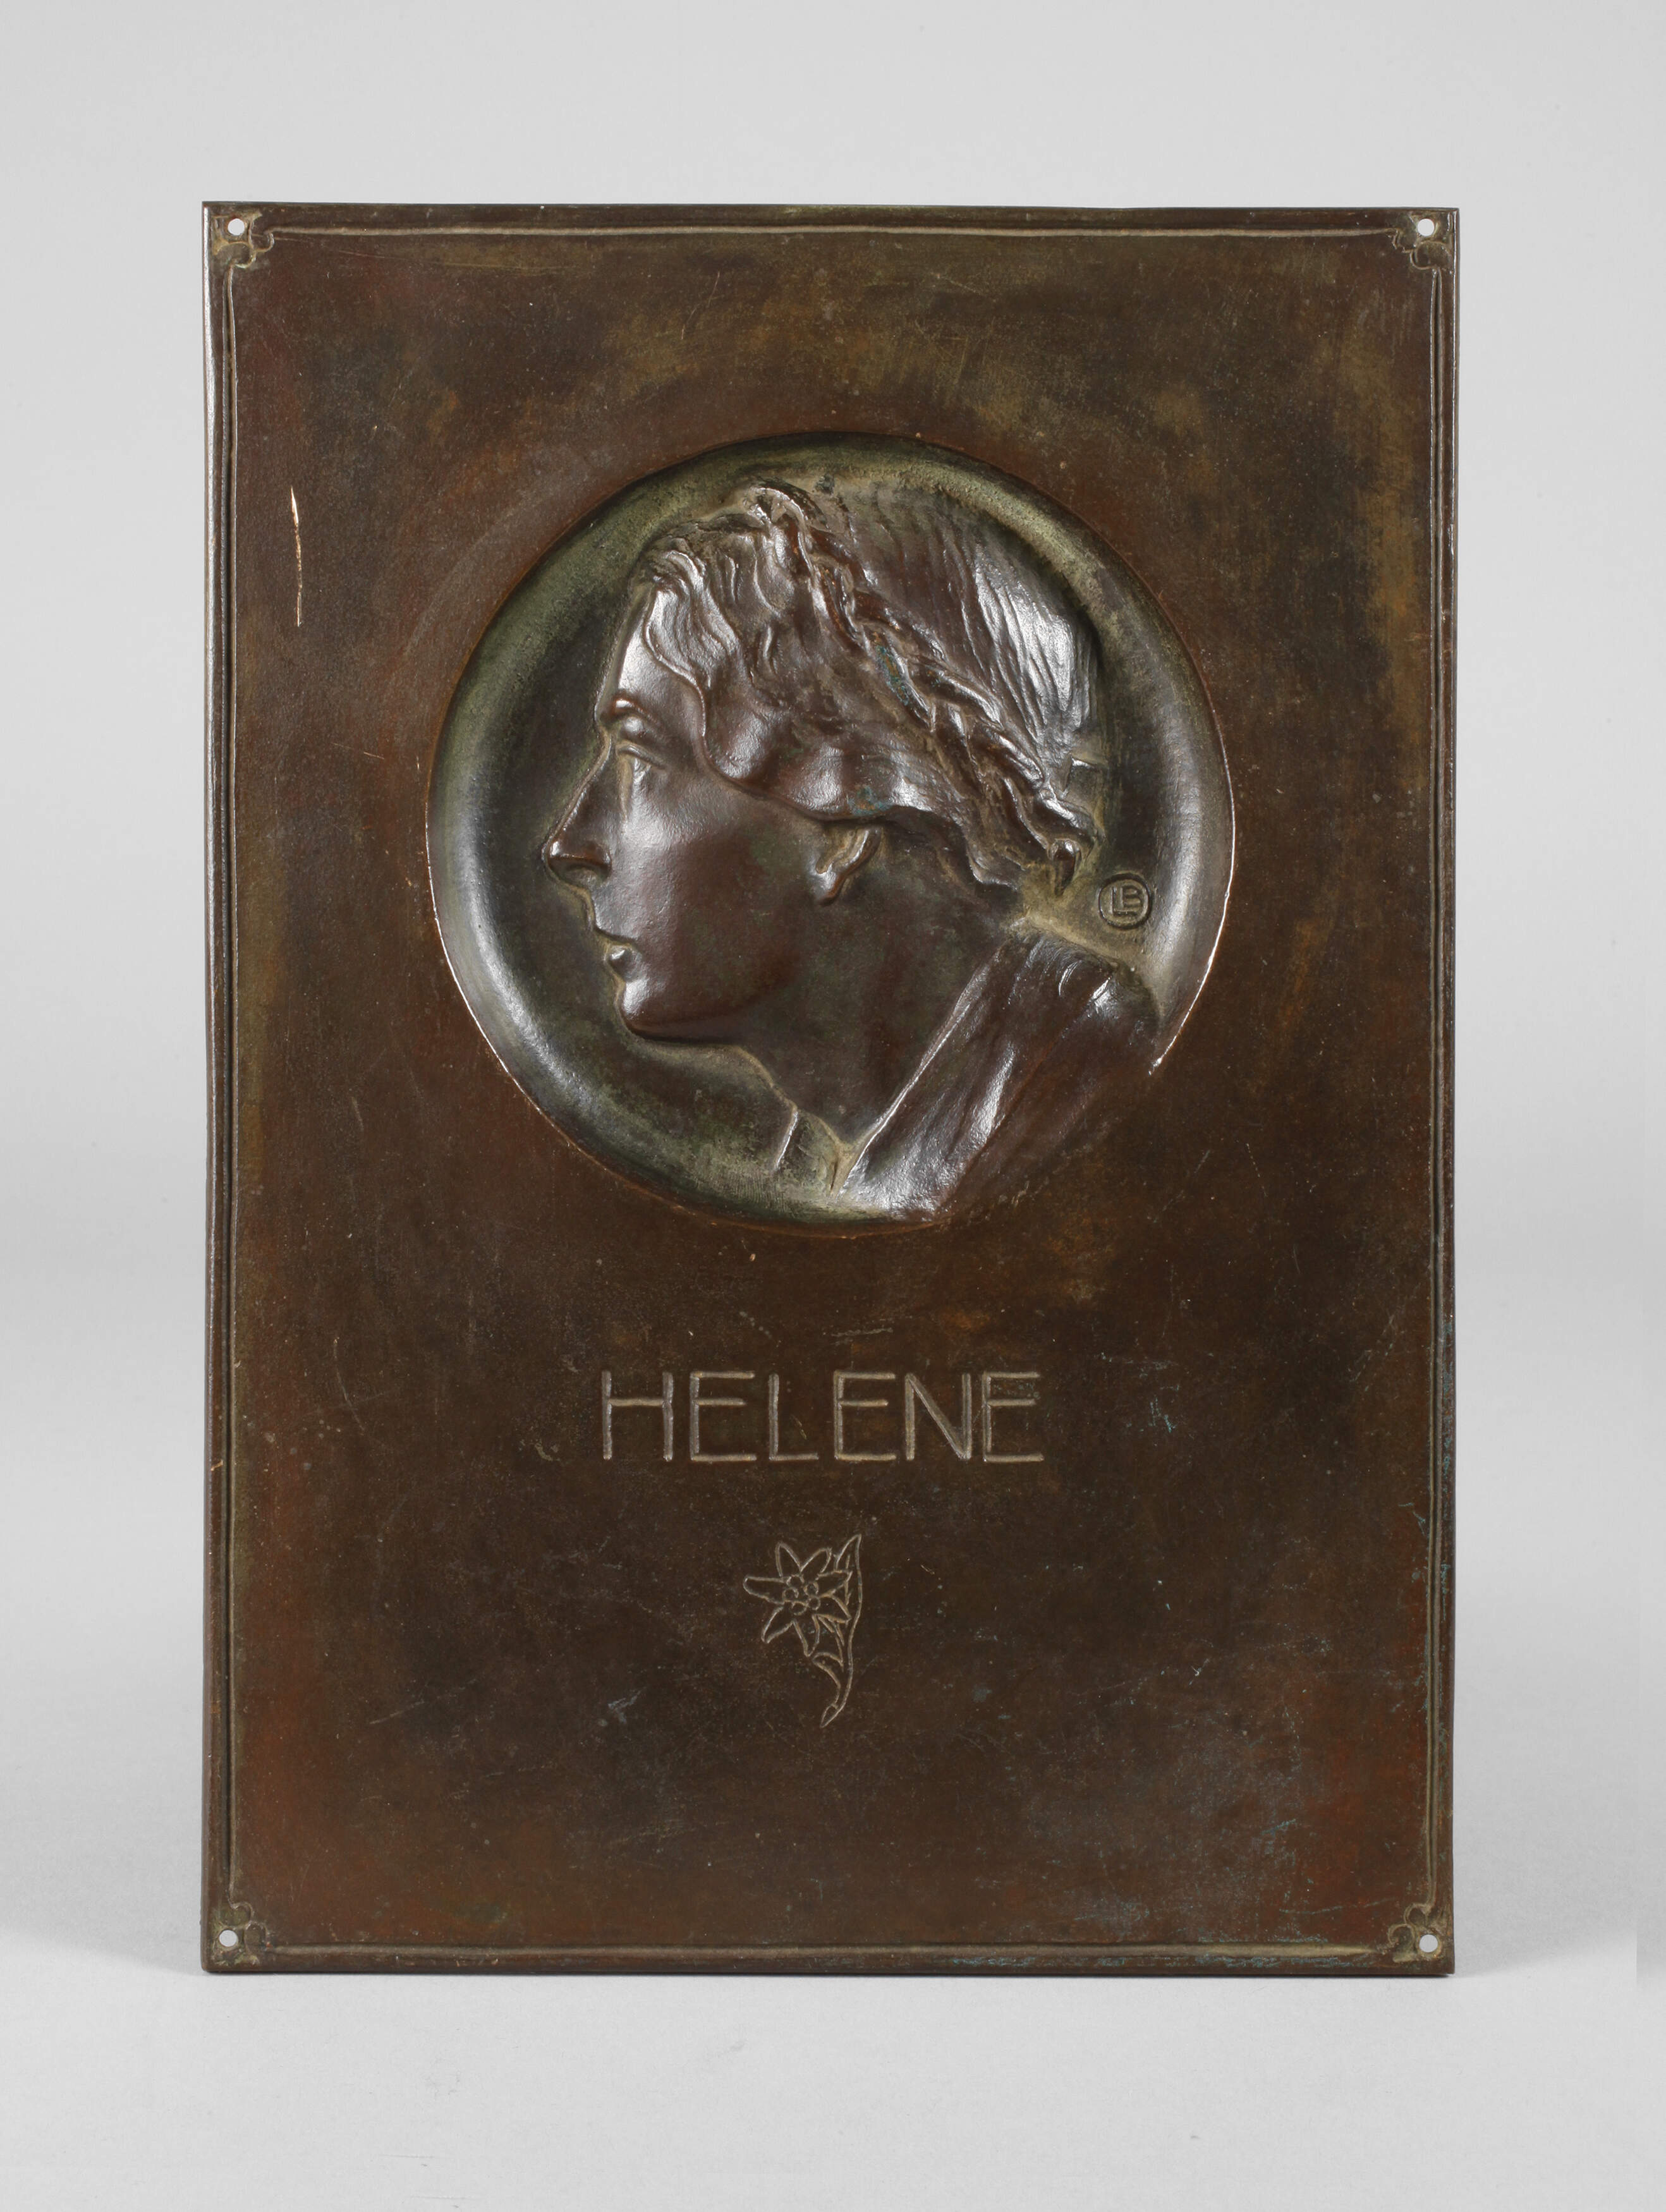 Wandplakette "Helene" mit Damenportrait